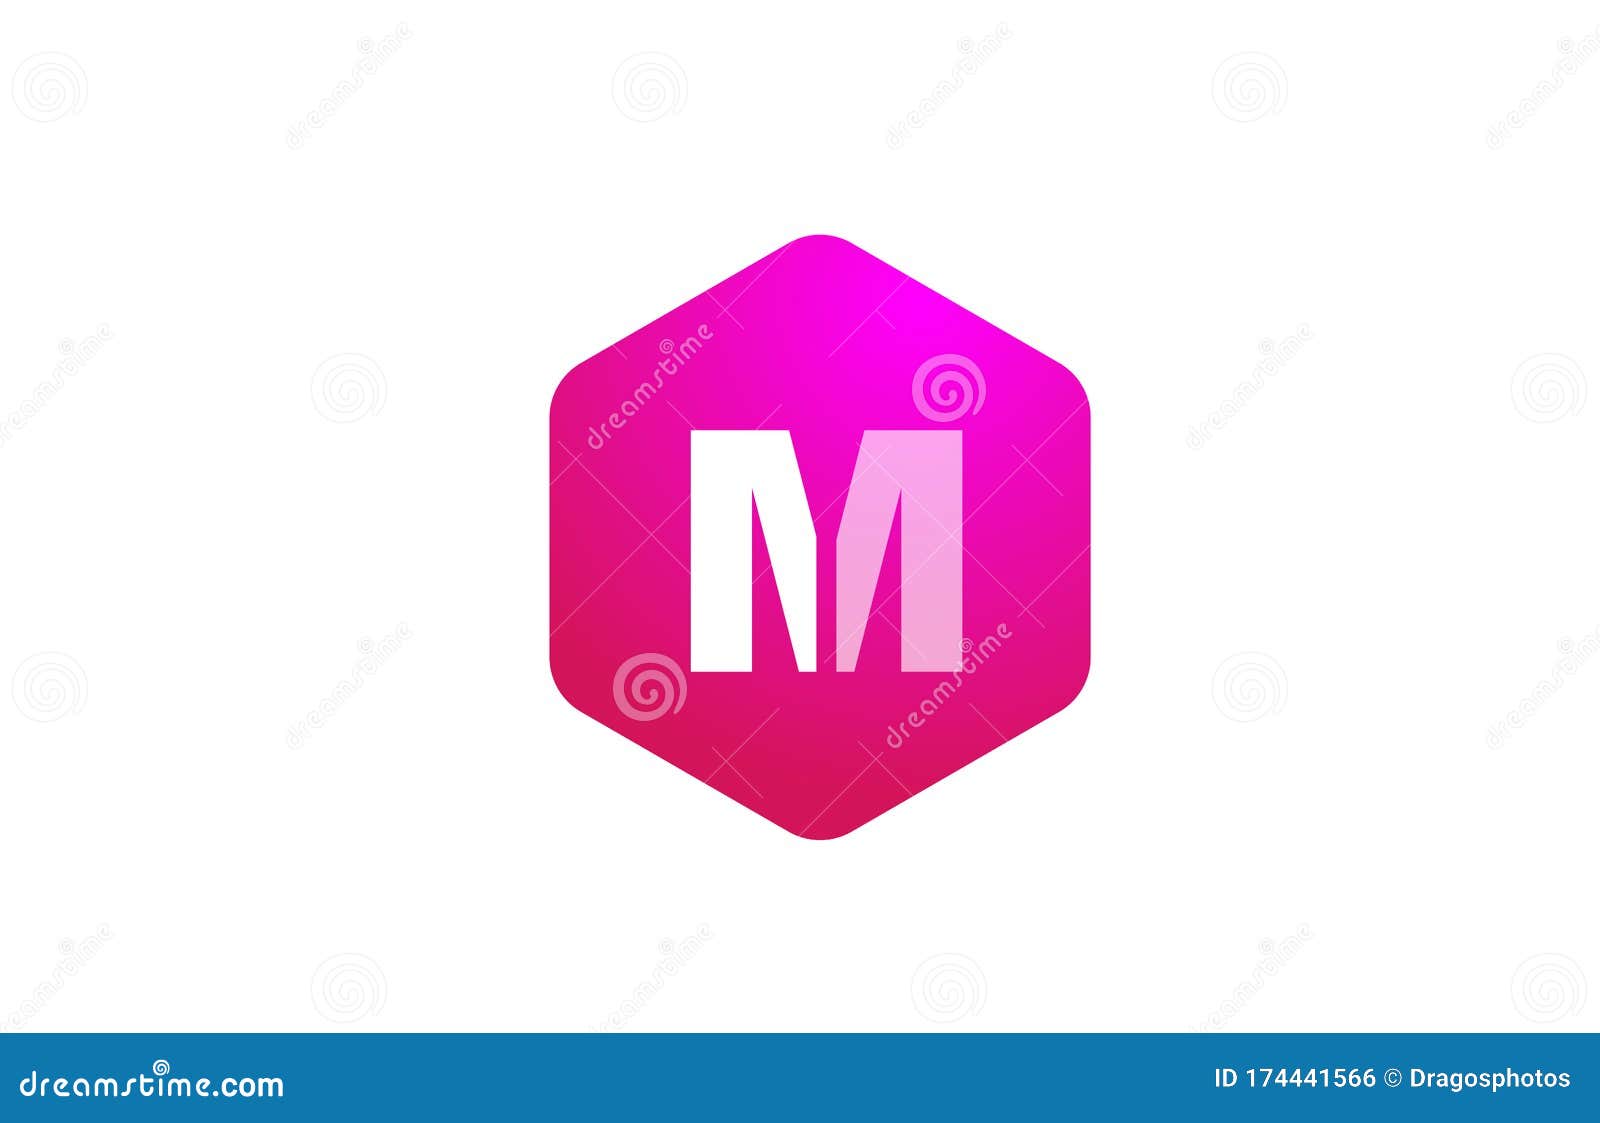 Pink White Polygon M Alphabet Letter Logo Icon with Modern Design ...